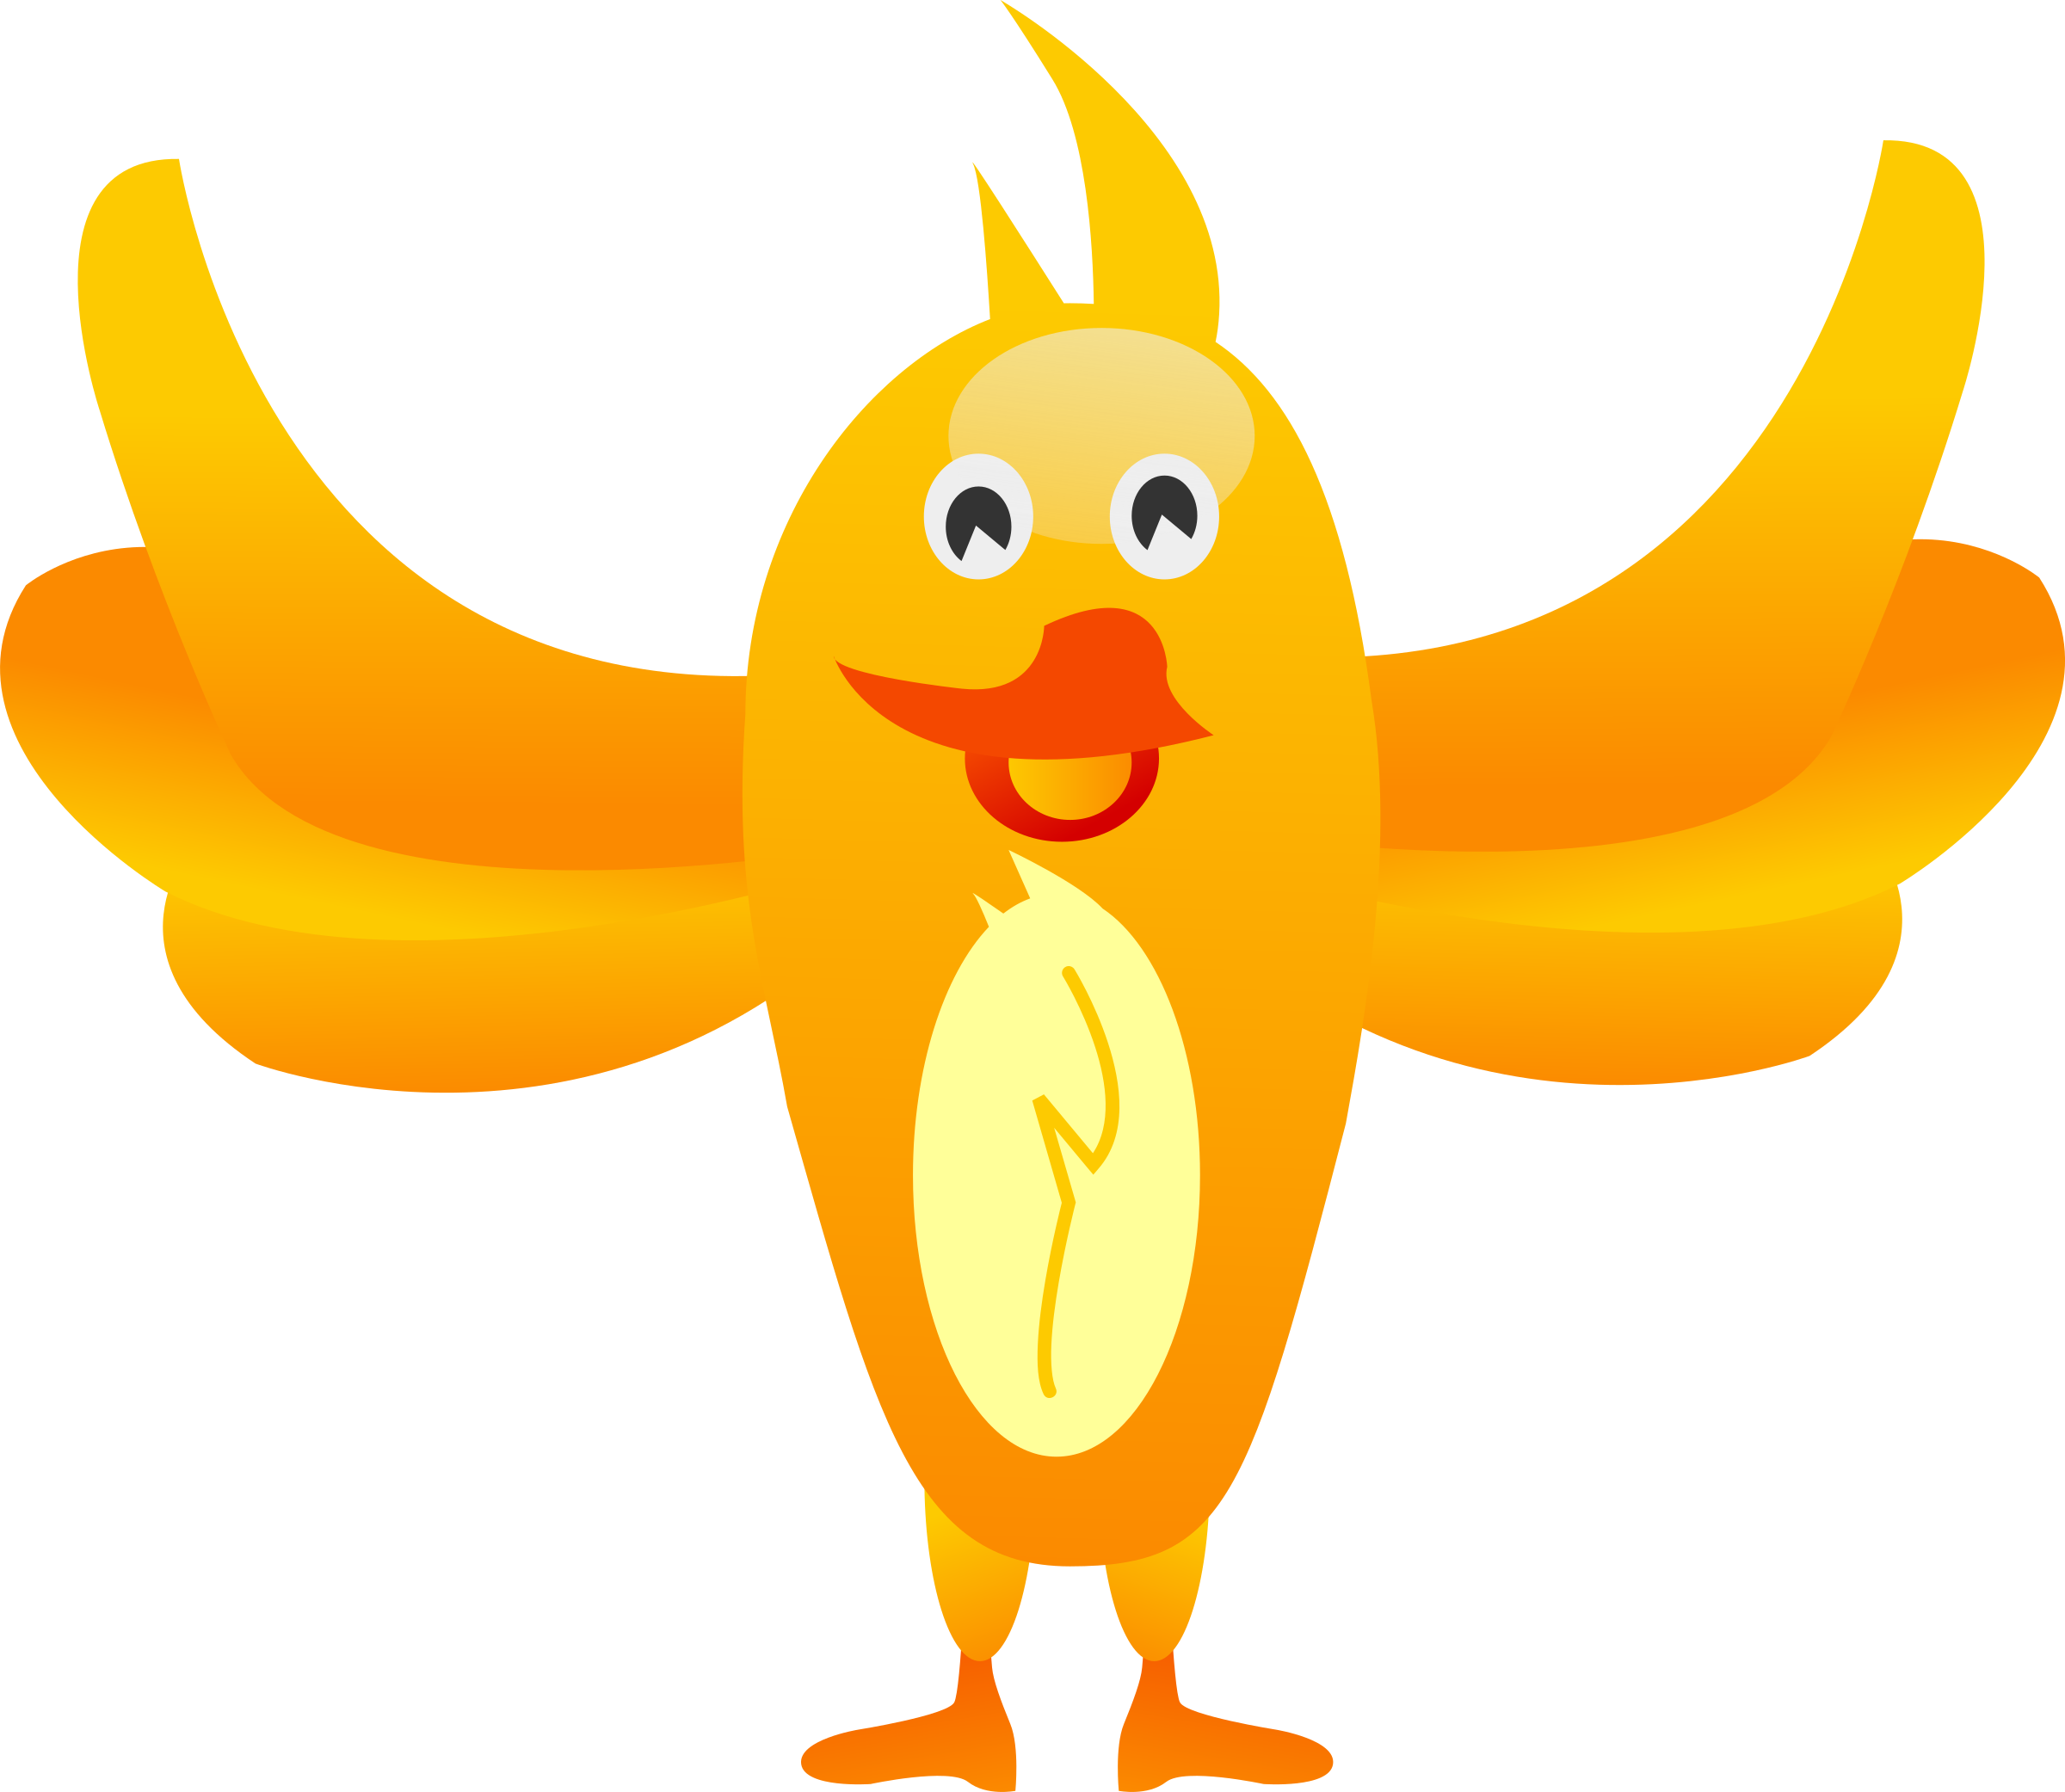 Orange bird clipart - ClipartFox